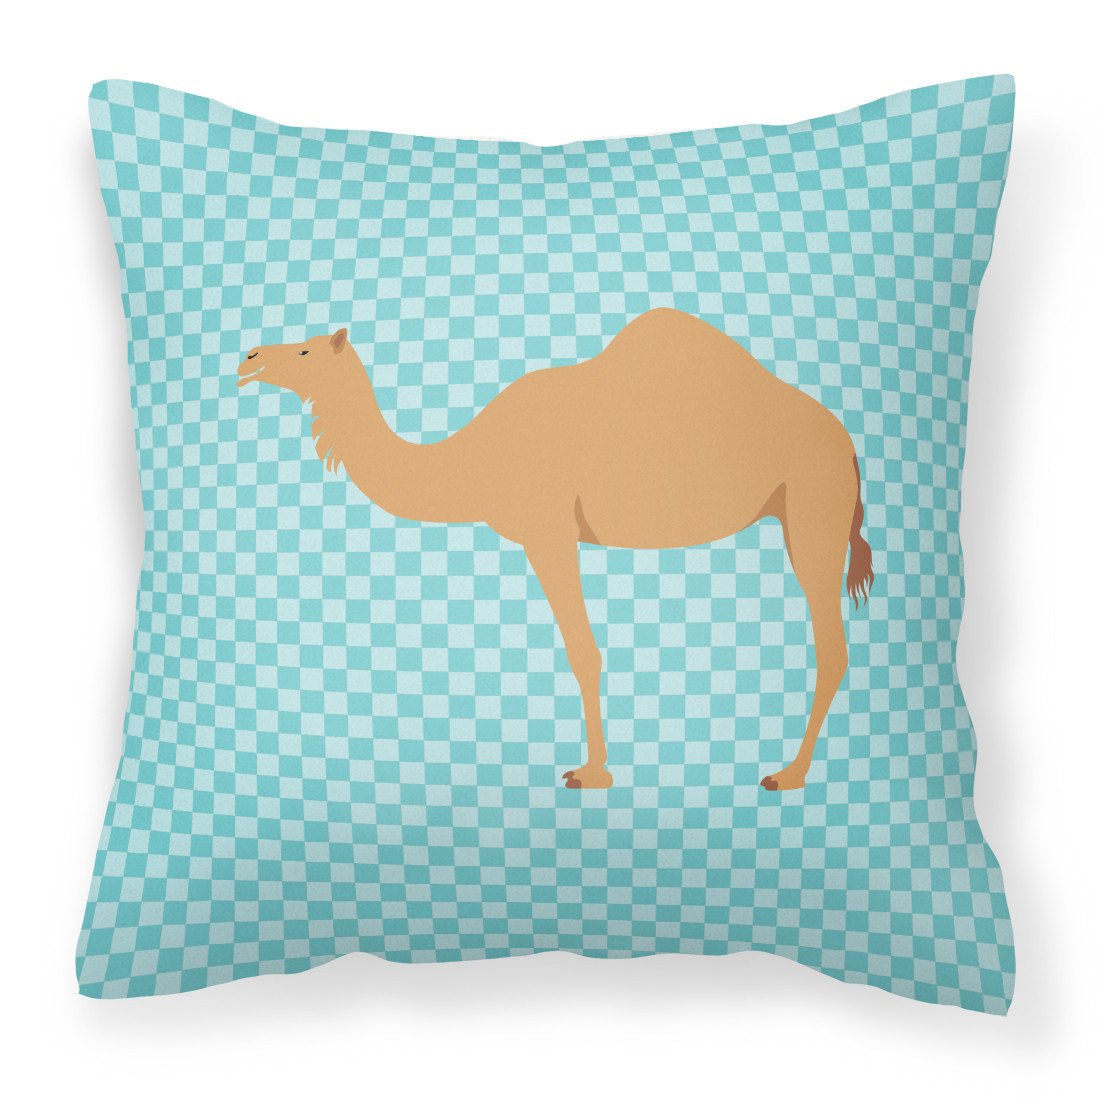 Arabian Camel Dromedary Blue Check Fabric Decorative Pillow BB7991PW1818 by Caroline's Treasures